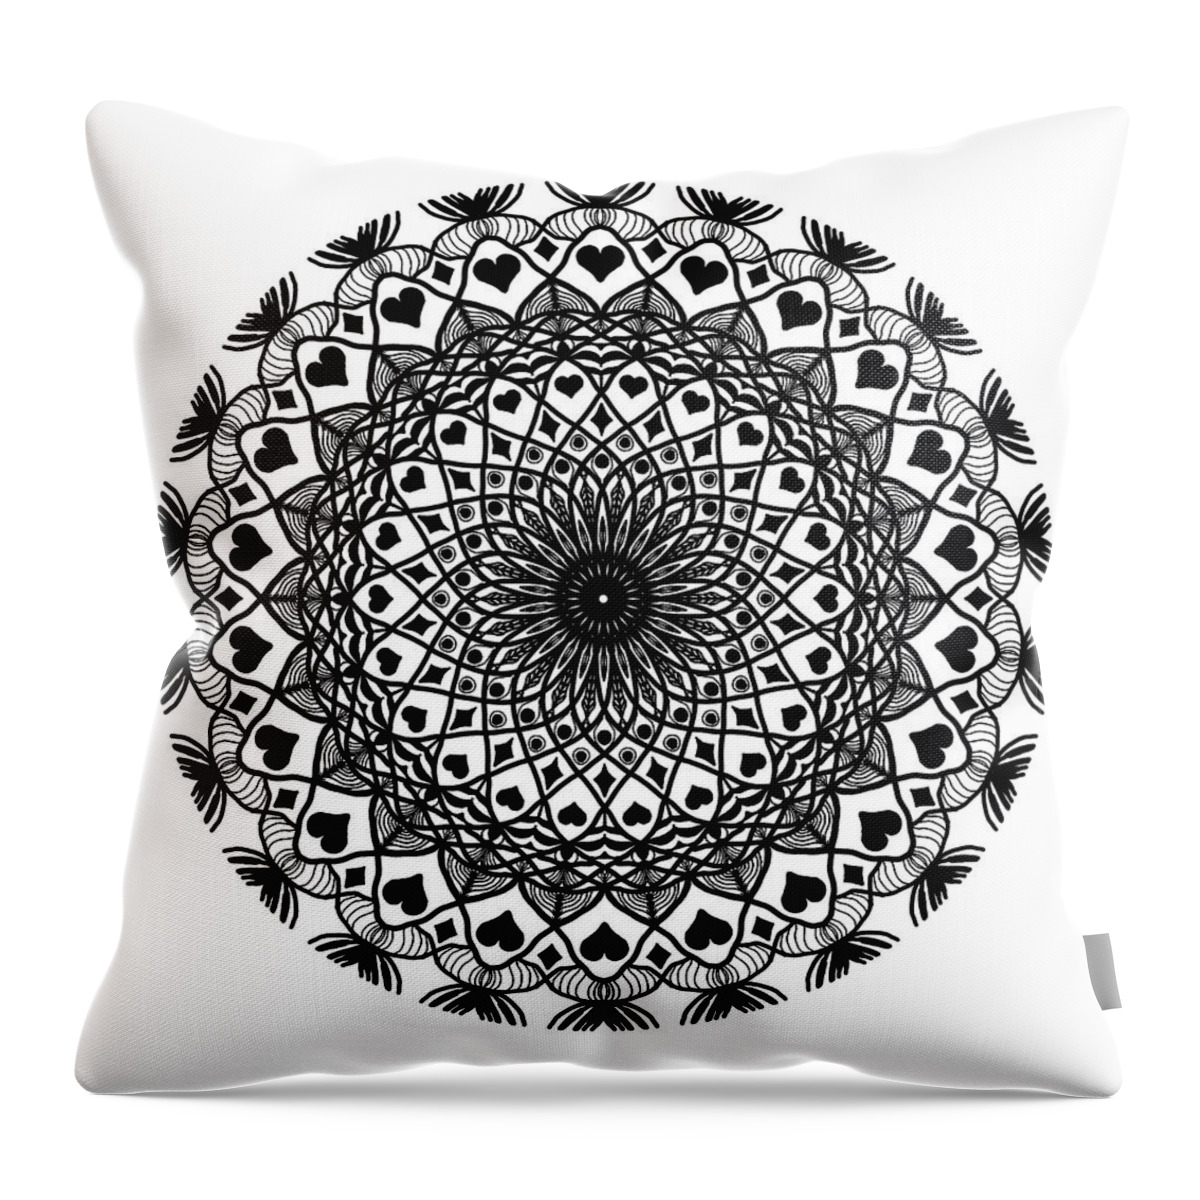 Mandala Throw Pillow featuring the digital art Queen of Hearts King of Diamonds Mandala by Becky Herrera